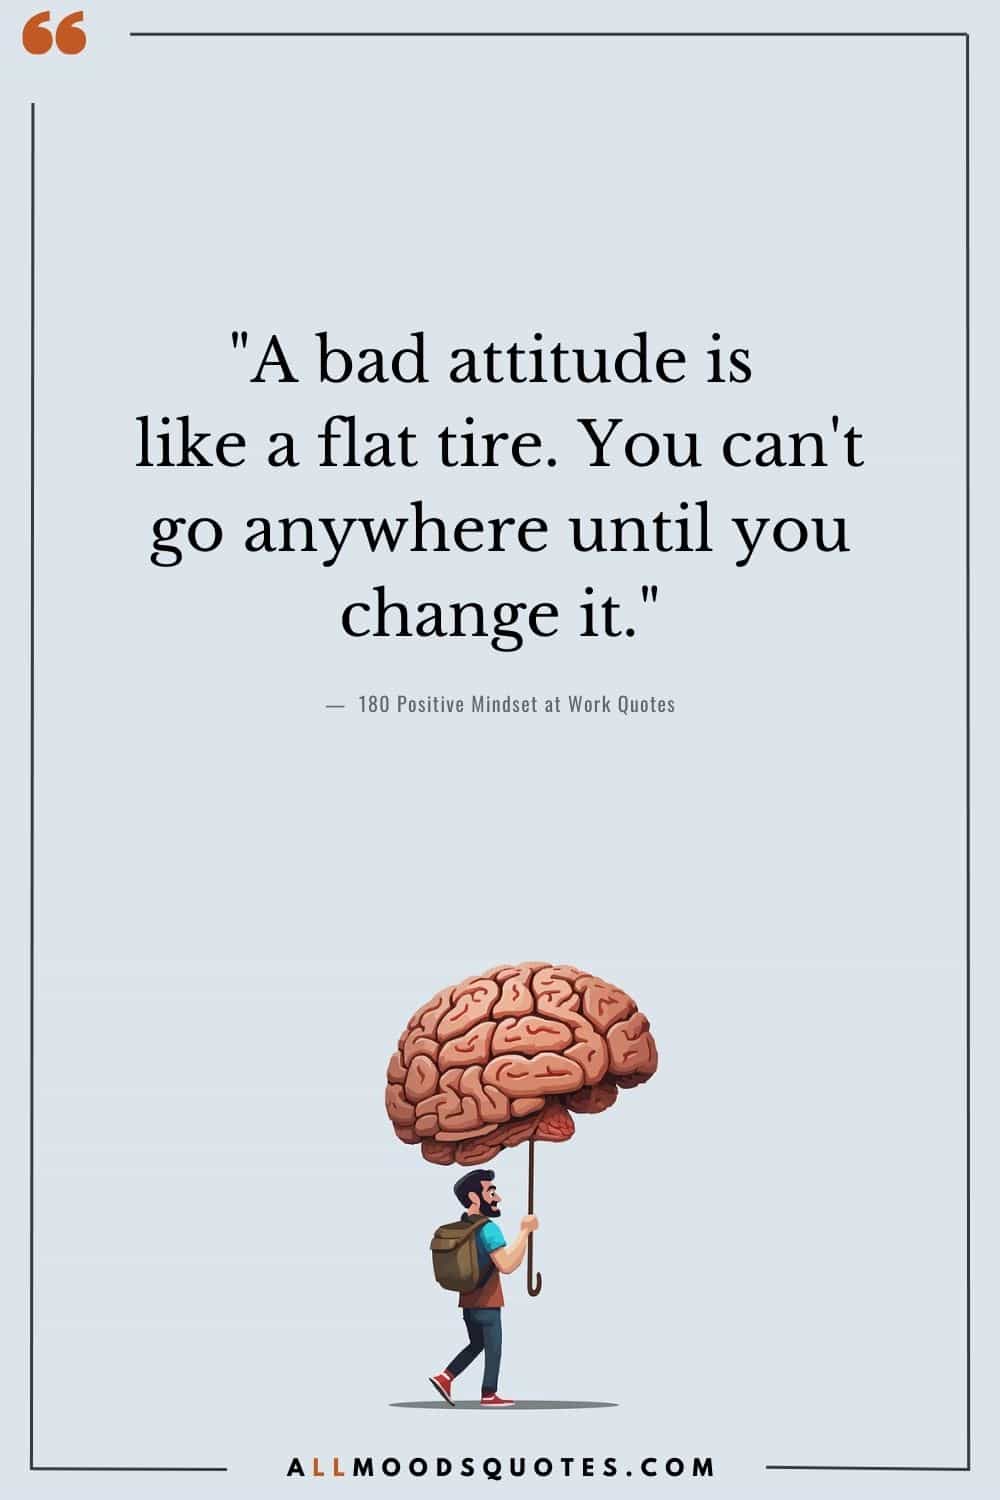 Good Attitude at Work Quotes